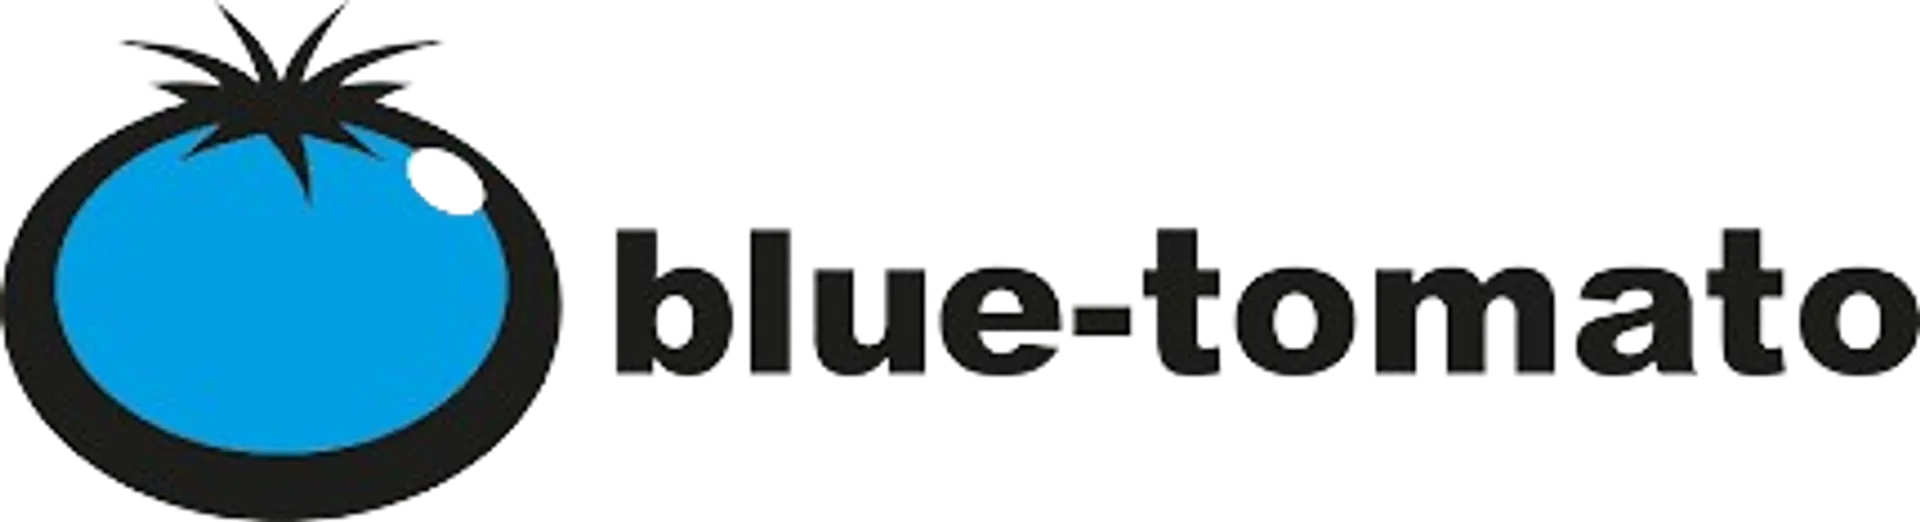 BLUE TOMATO logo die aktuell Flugblatt